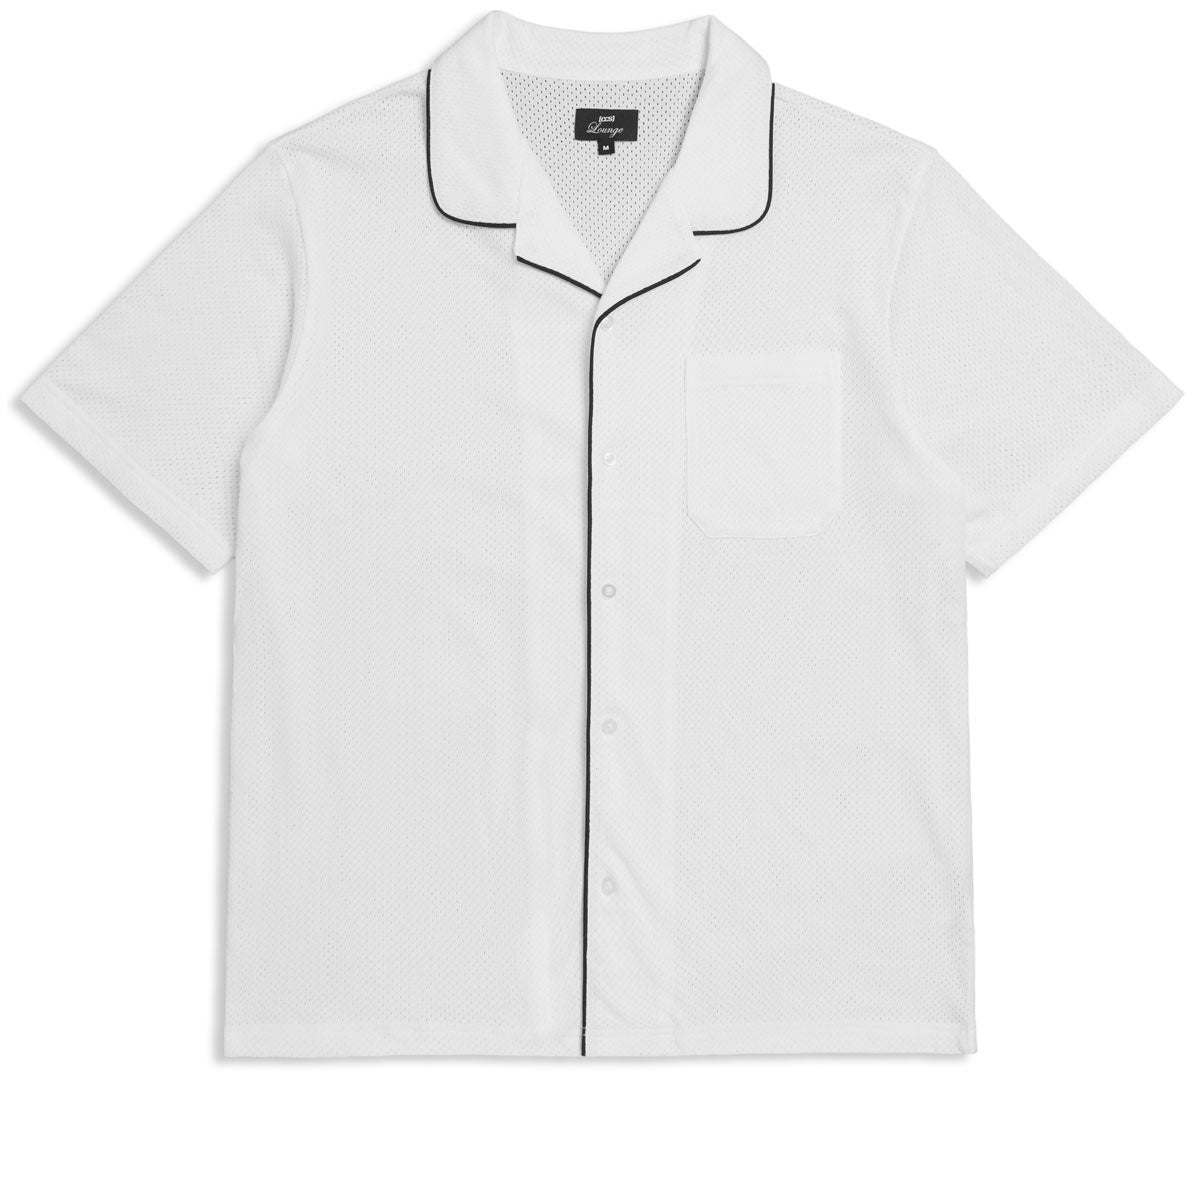 CCS Lounge Mesh Shirt - White image 1